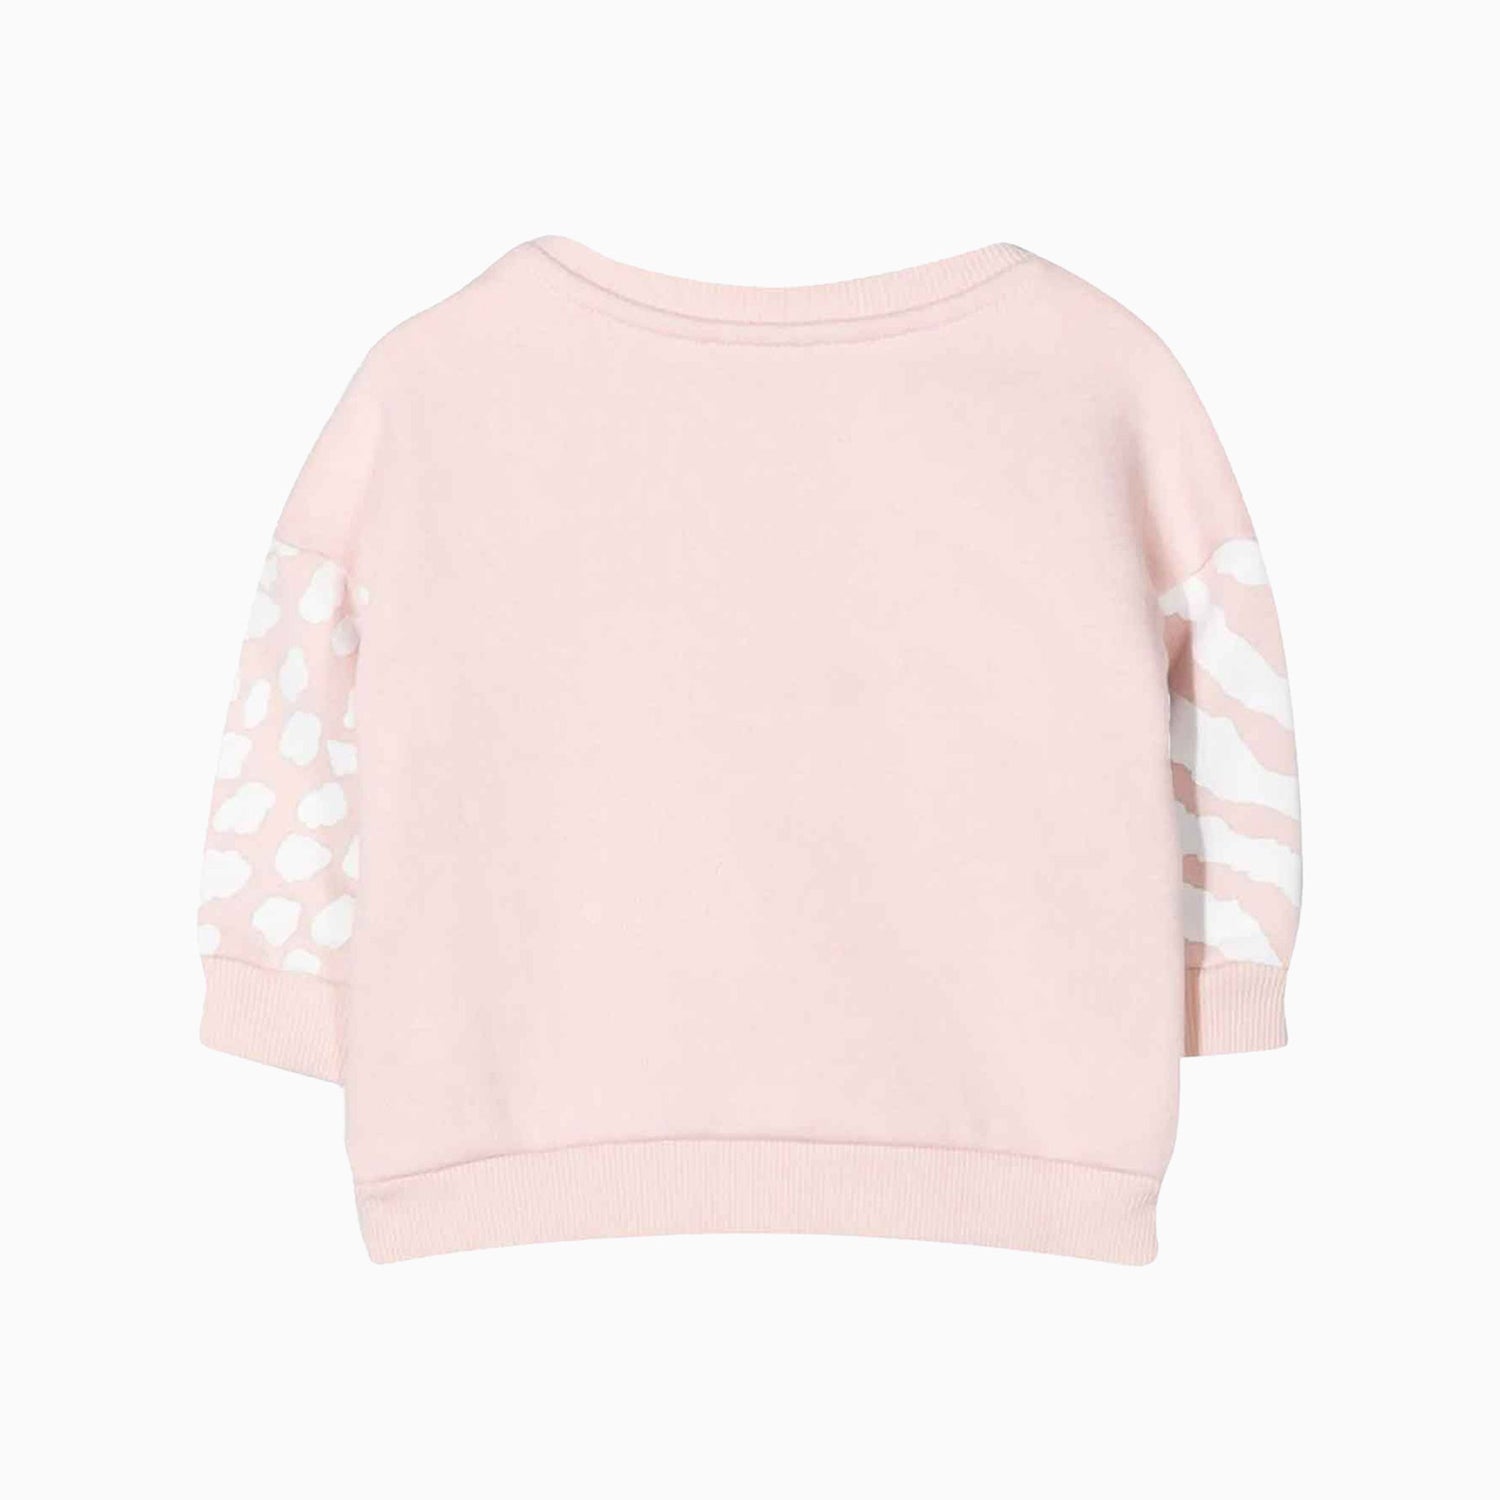 Kenzo Kid's Tiger And Friends Sweatshirt - Color: Pink - Kids Premium Clothing -